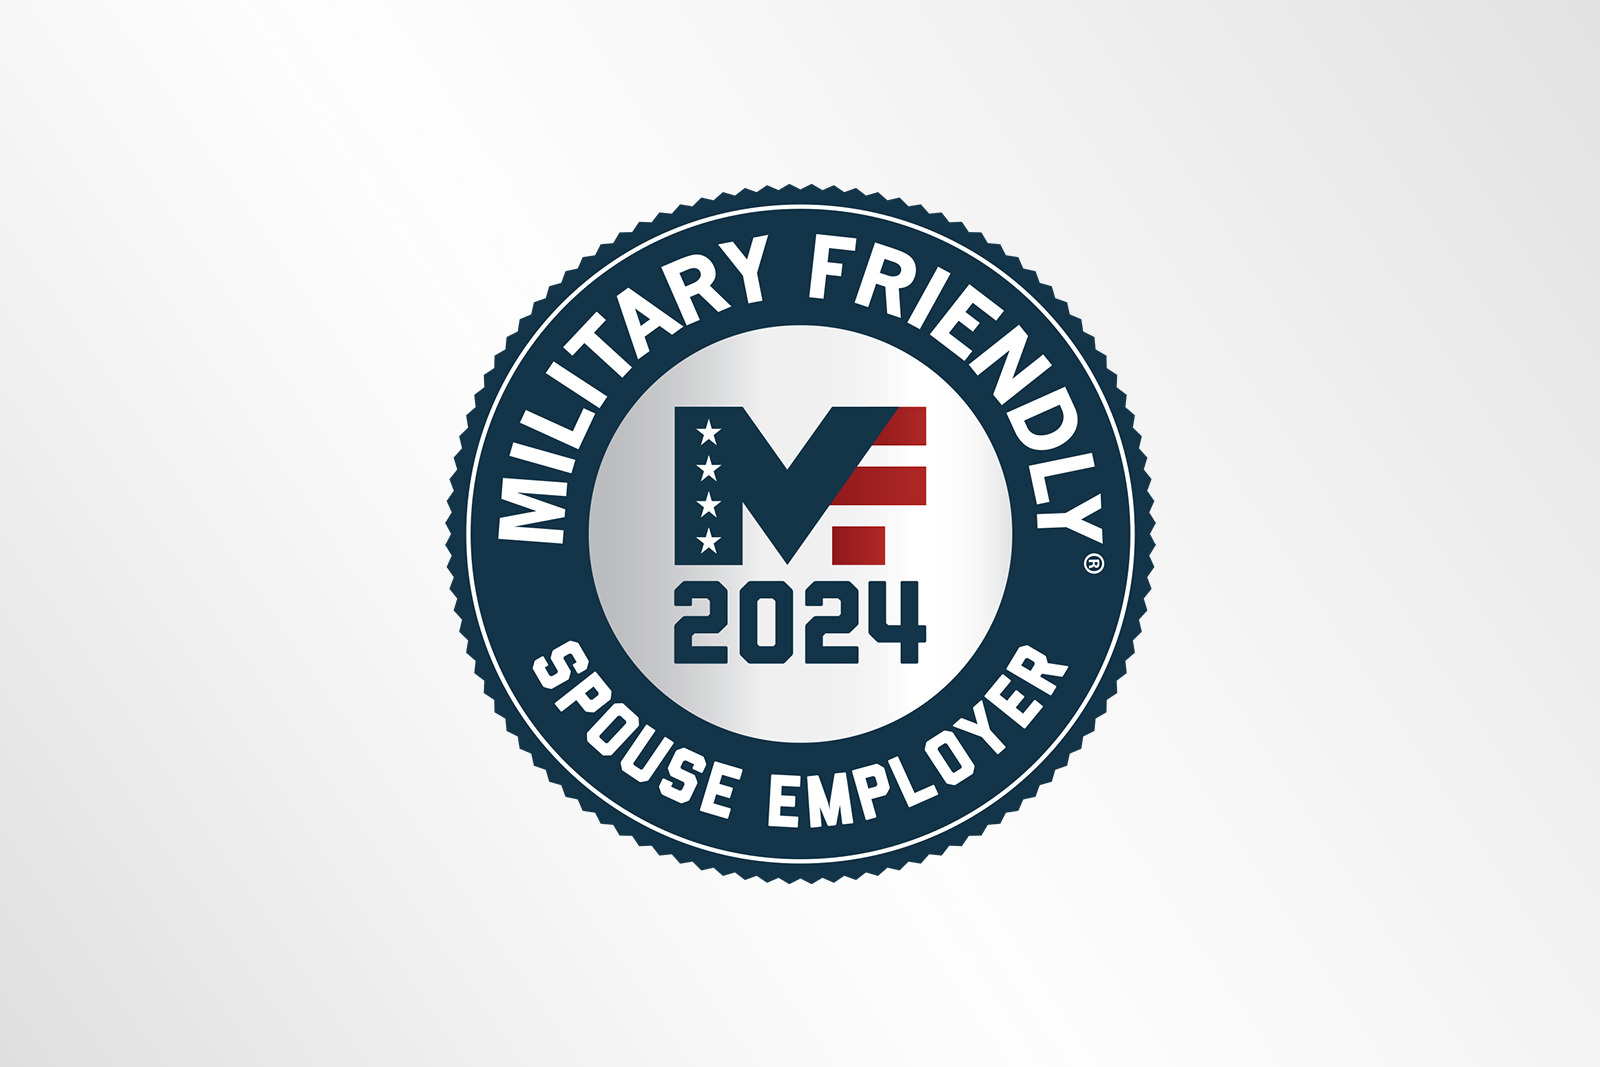 Military Friendly® Spouse Employer logo